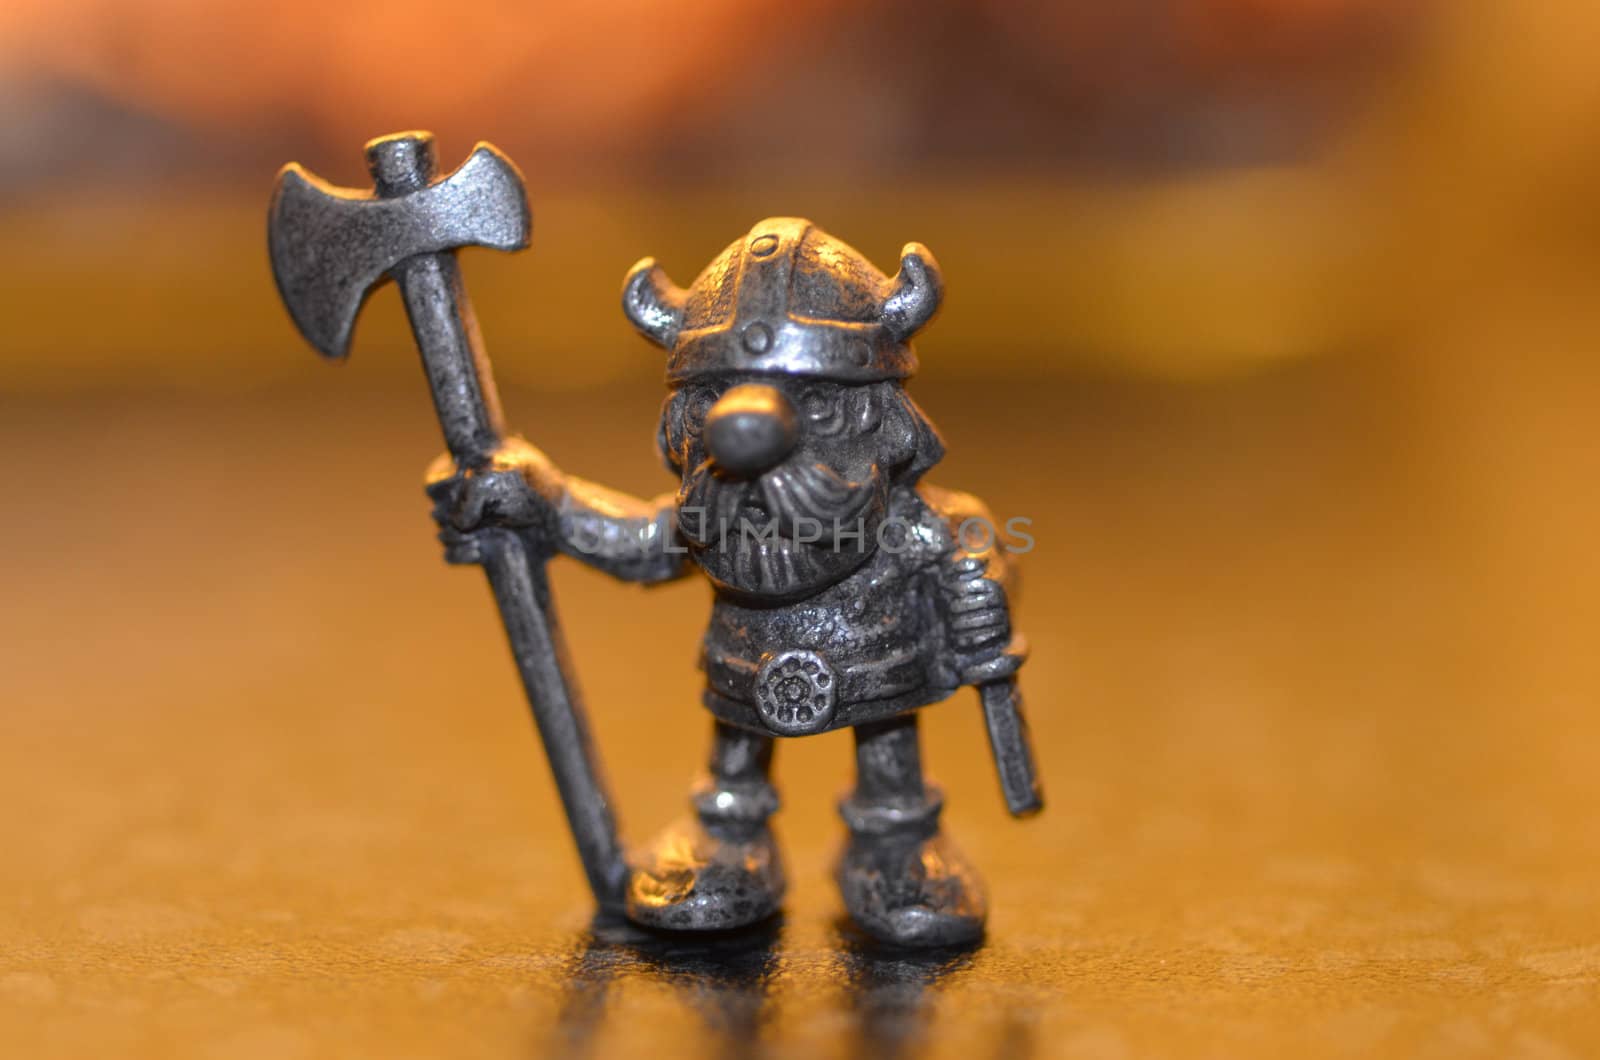 A viking figurine holding an axe,